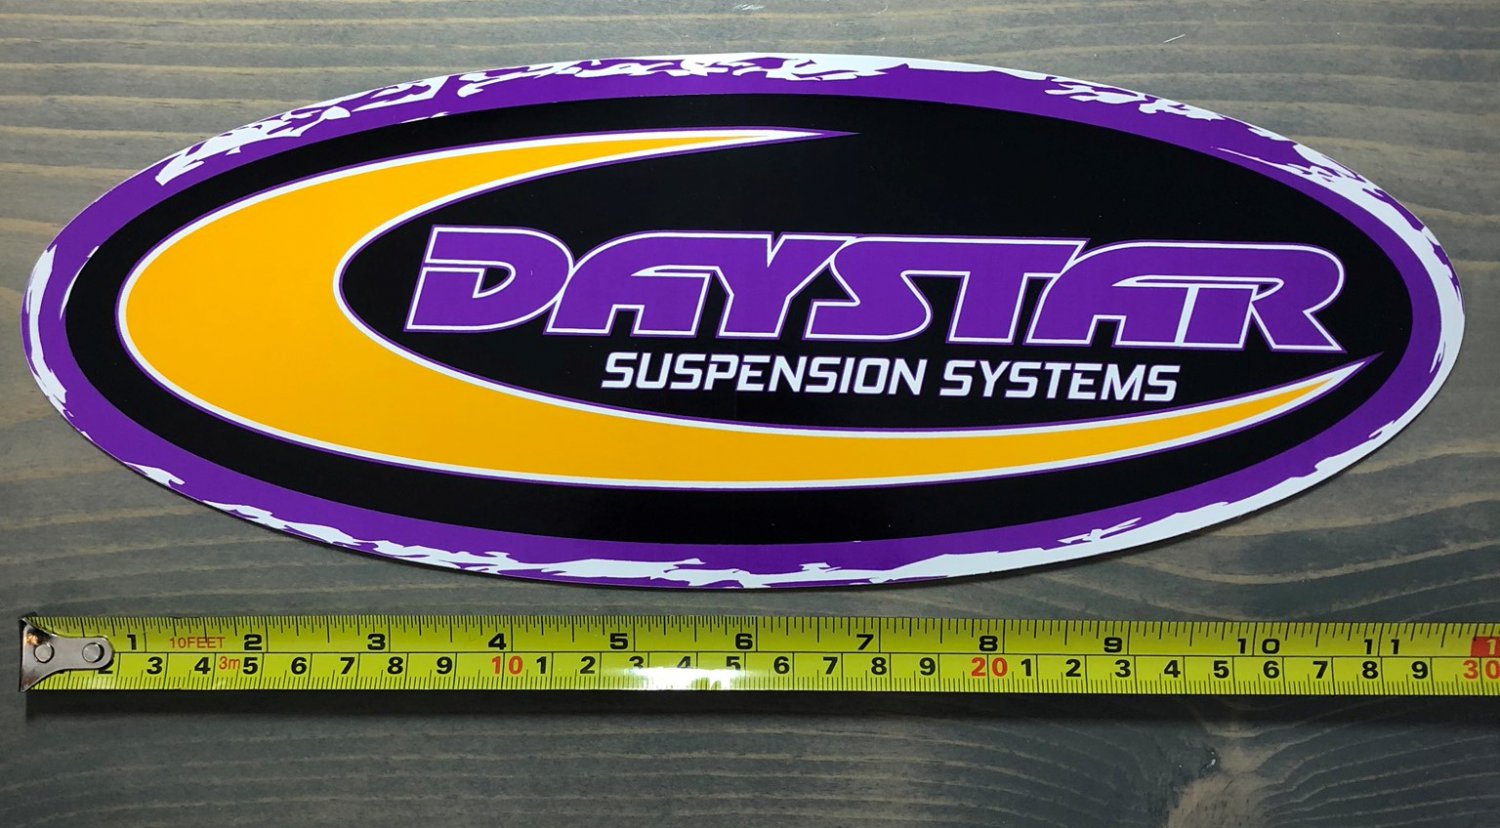 11 Daystar Suspension System Sticker Decal Racing 4x4 Truck